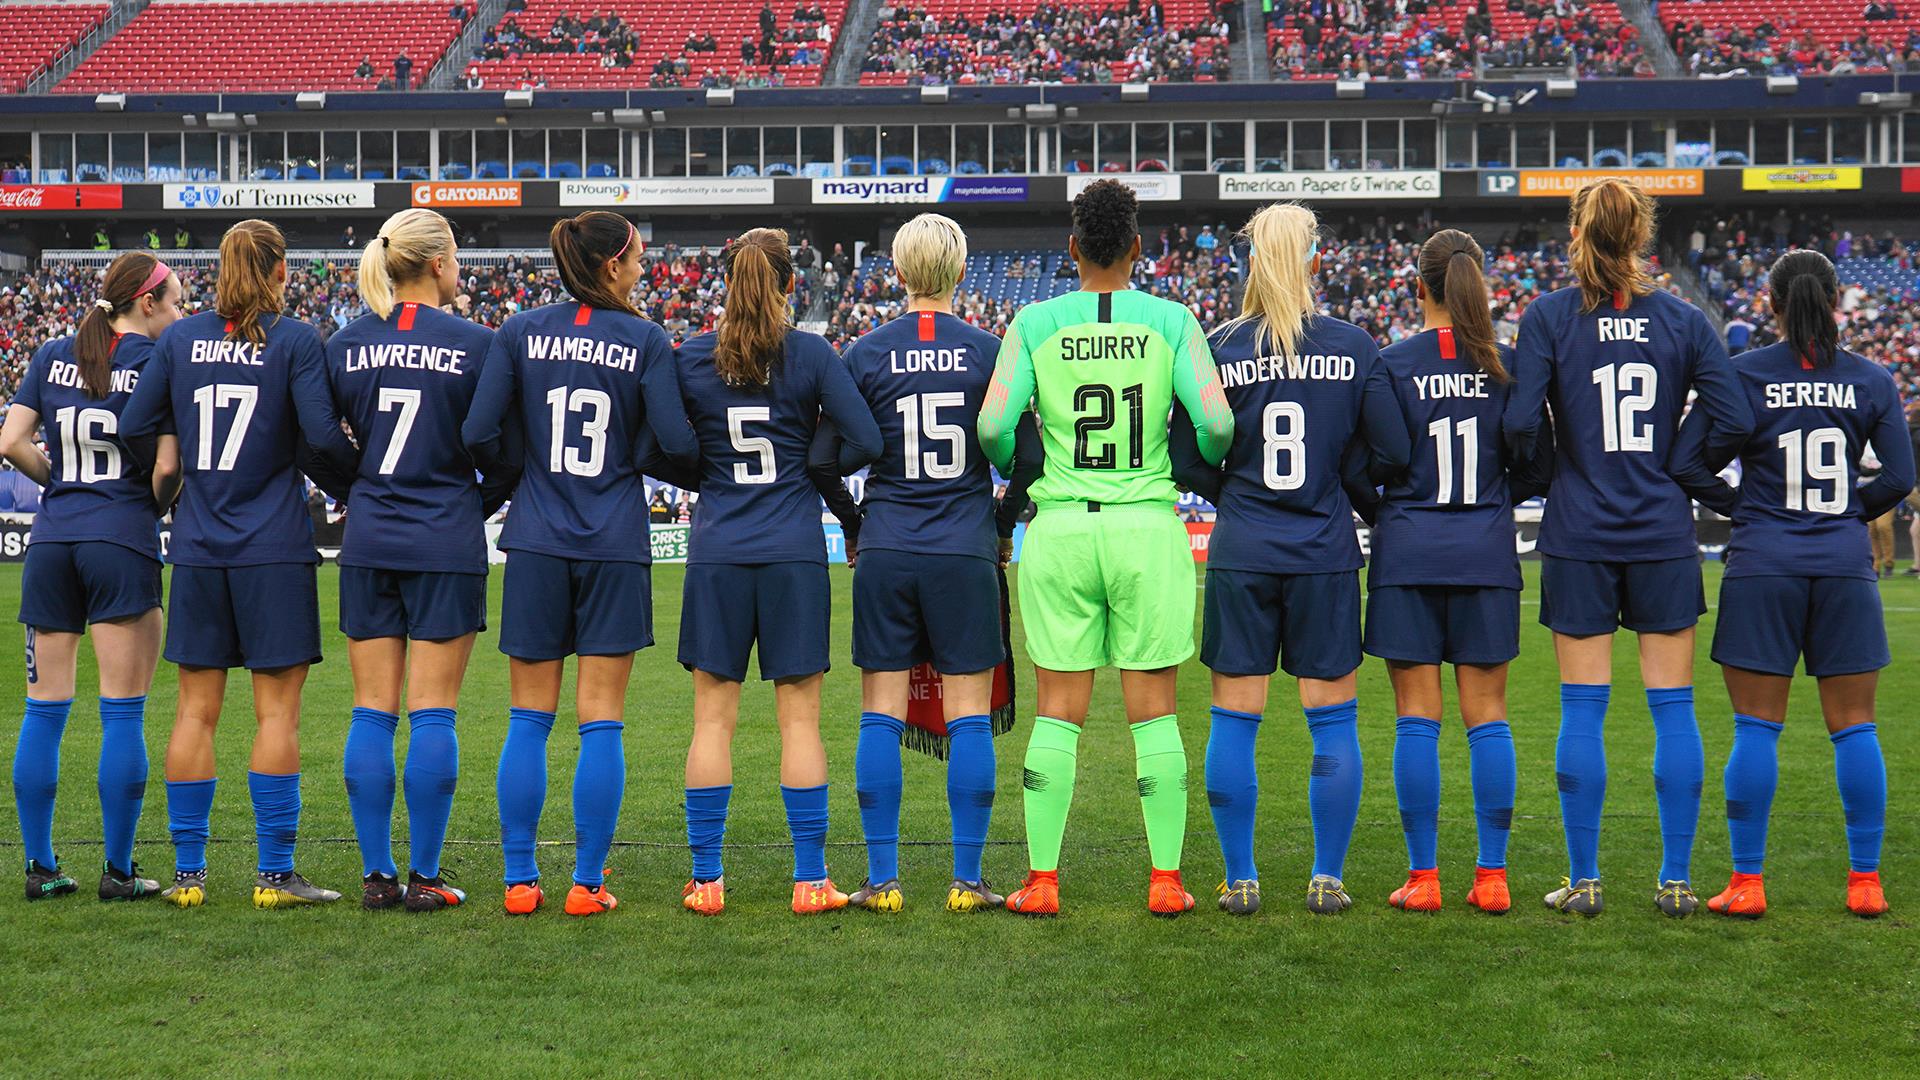 U.S. women's soccer team files gender discrimination suit against its own federation